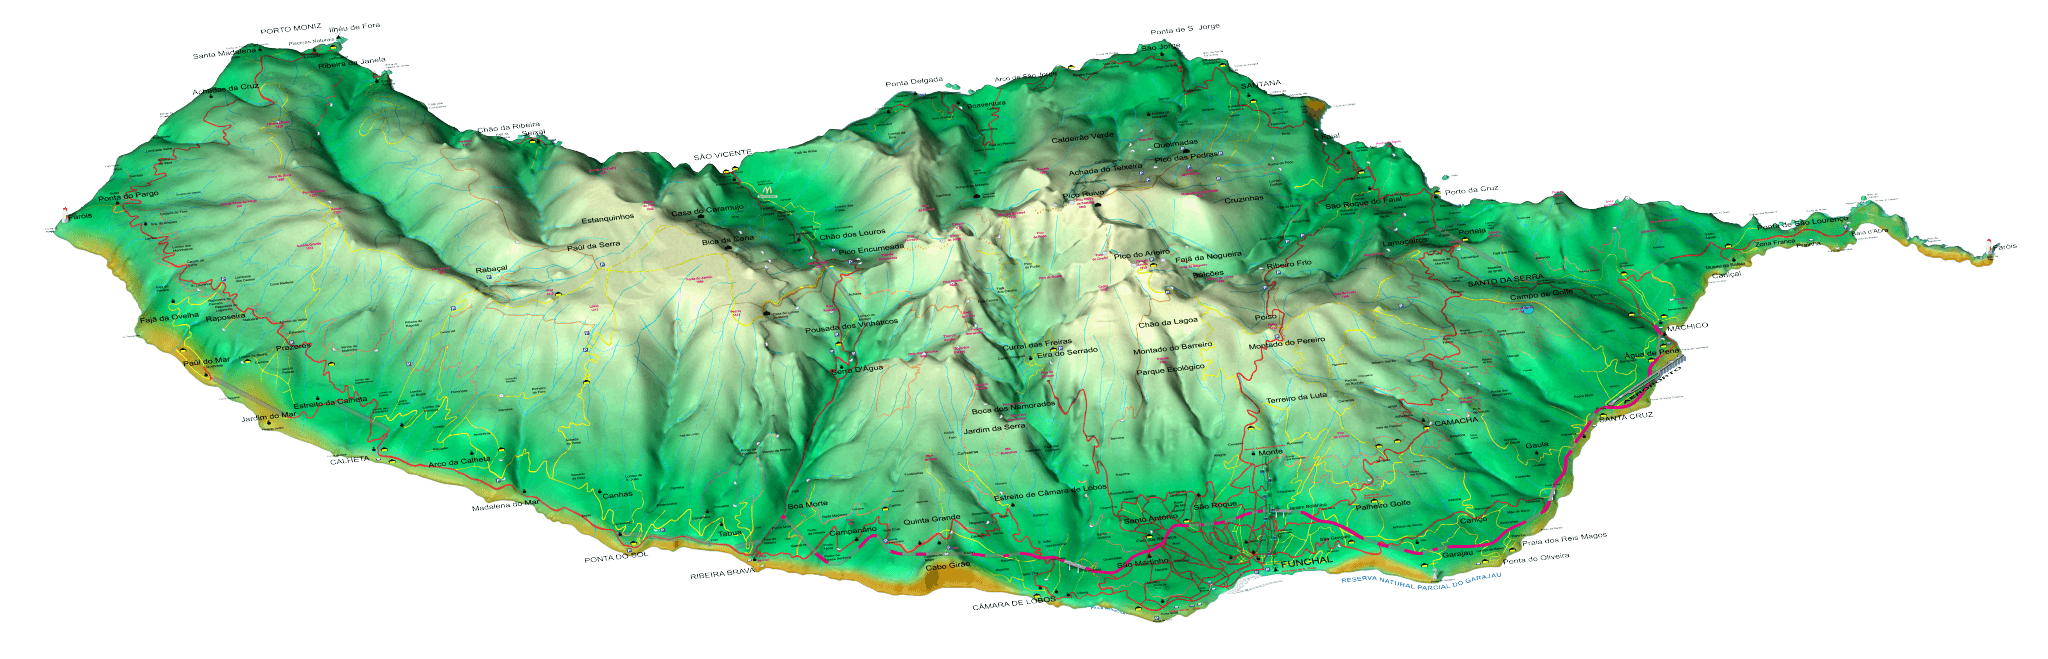 Madeira Island Levadas and Walks Map